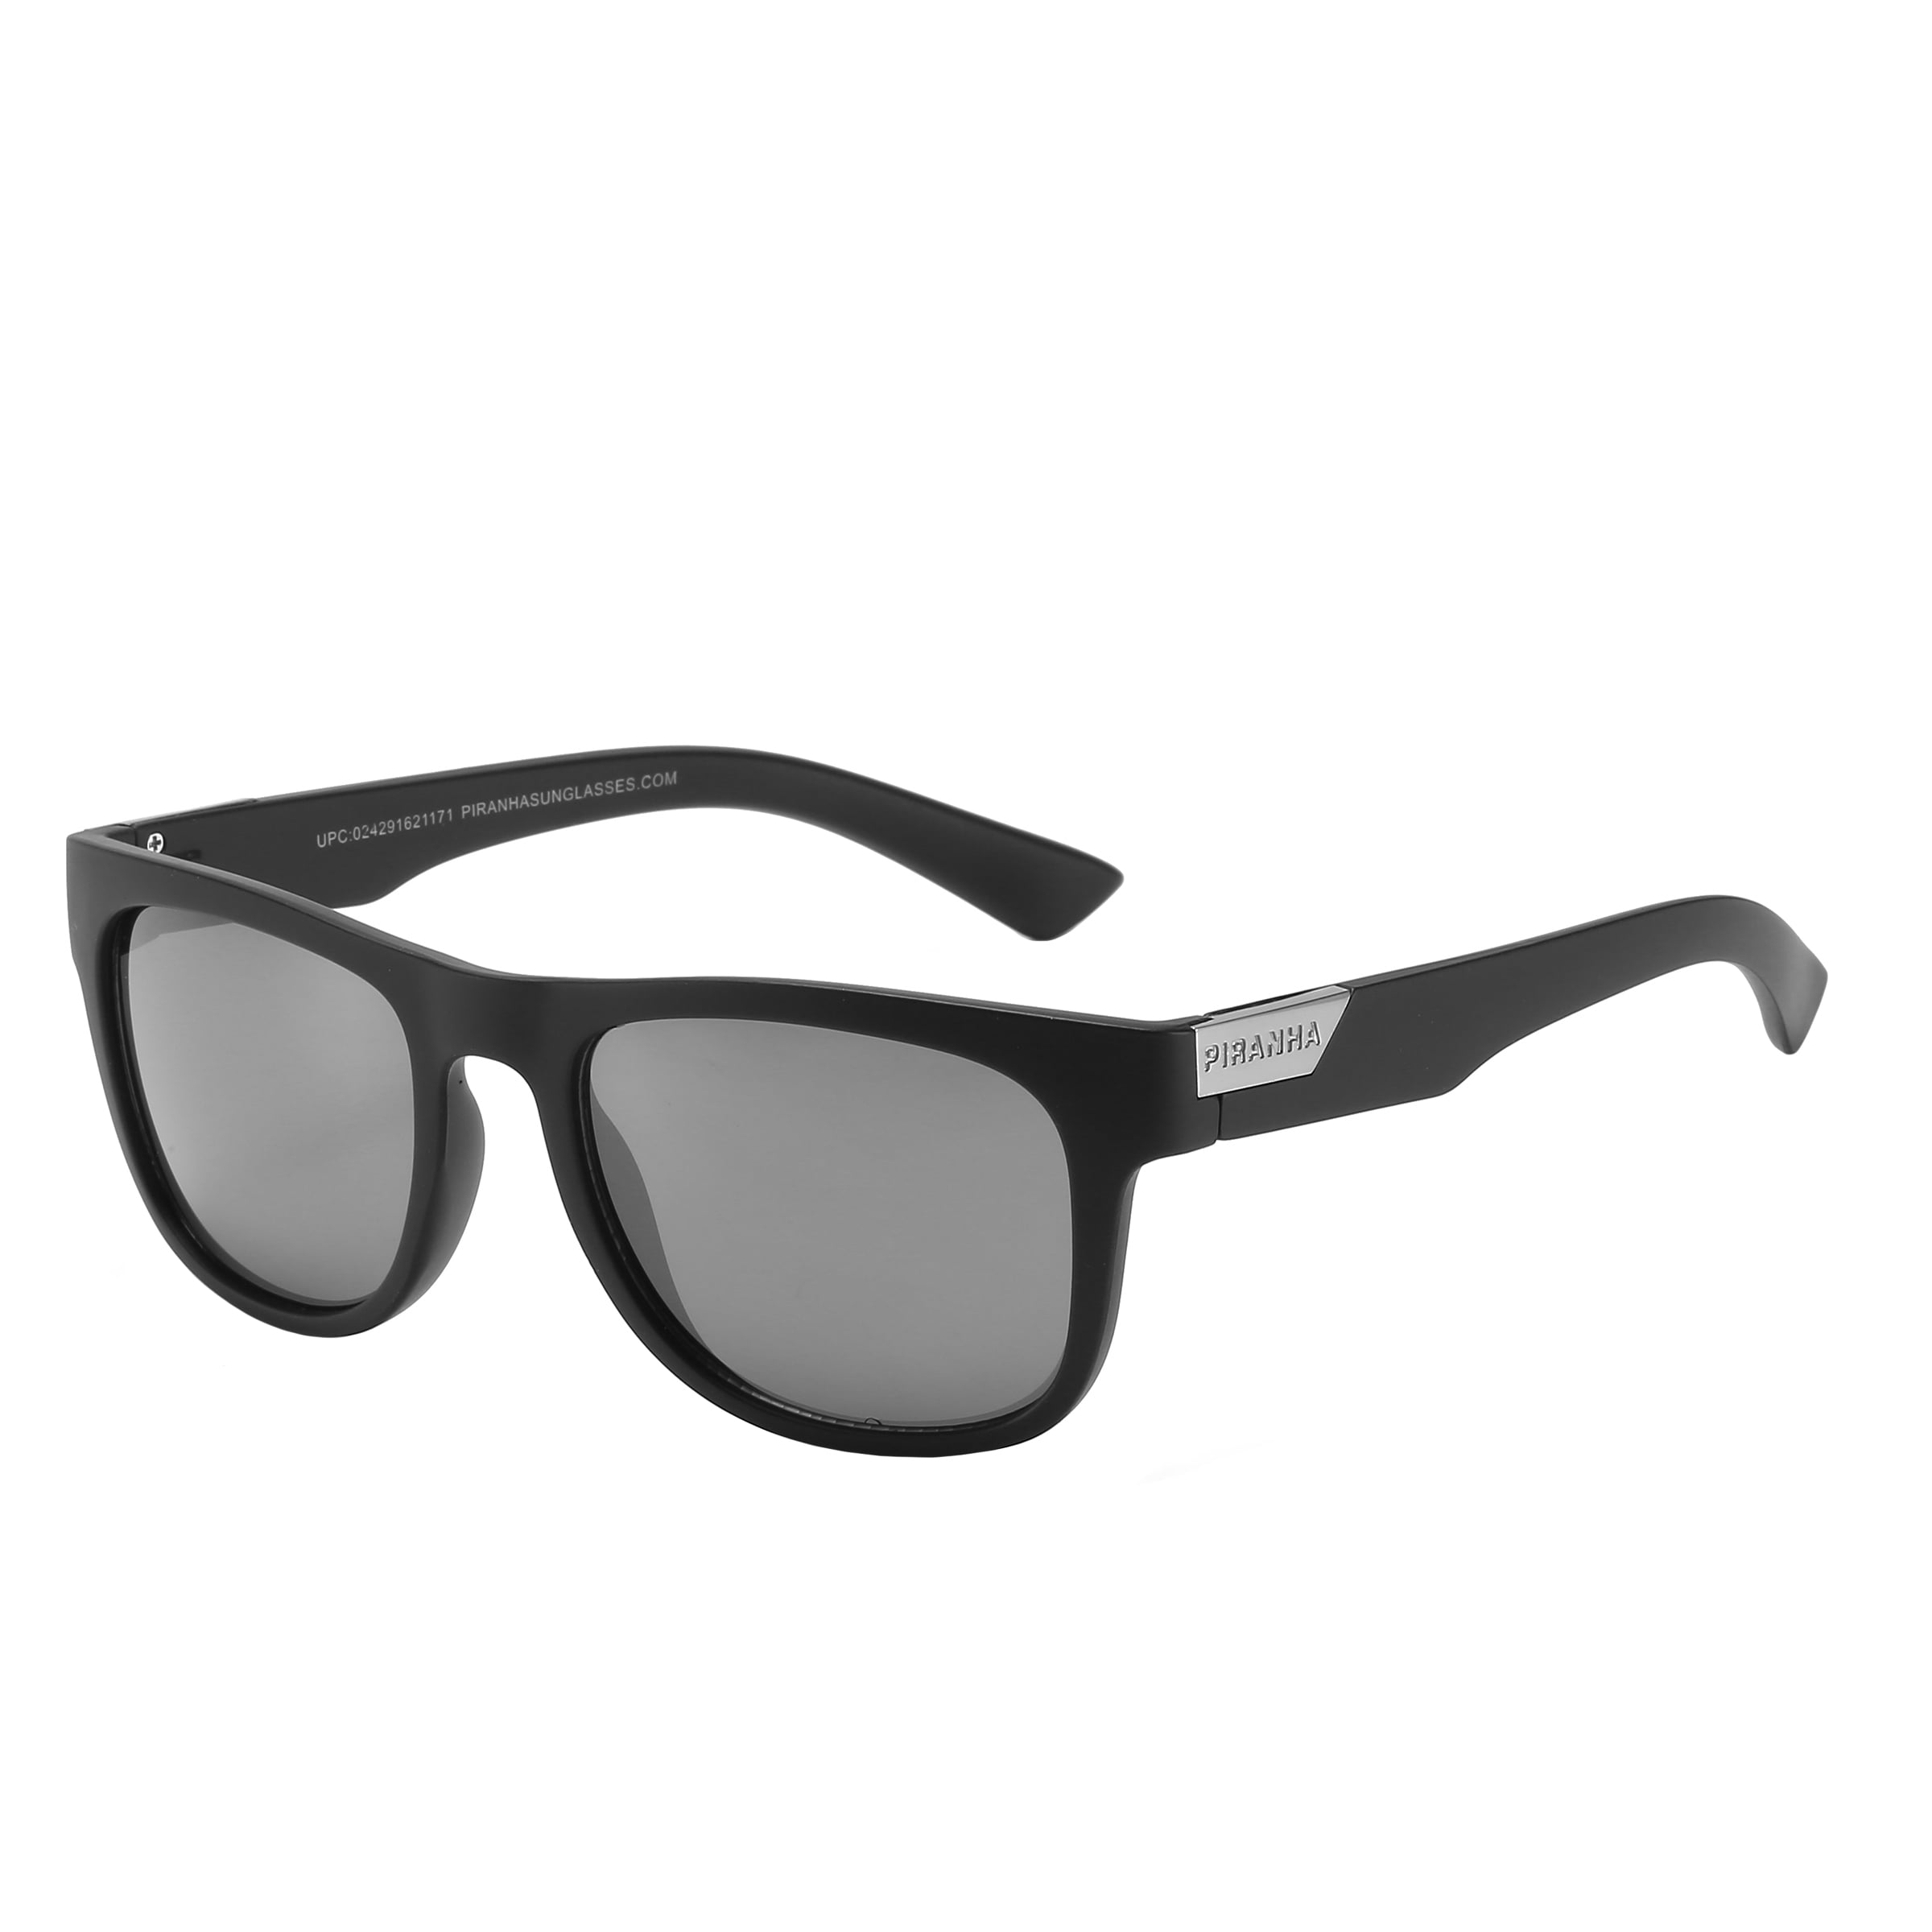 Piranha Eyewear Kemari Square Black Sunglasses for Men with Smoke Lens